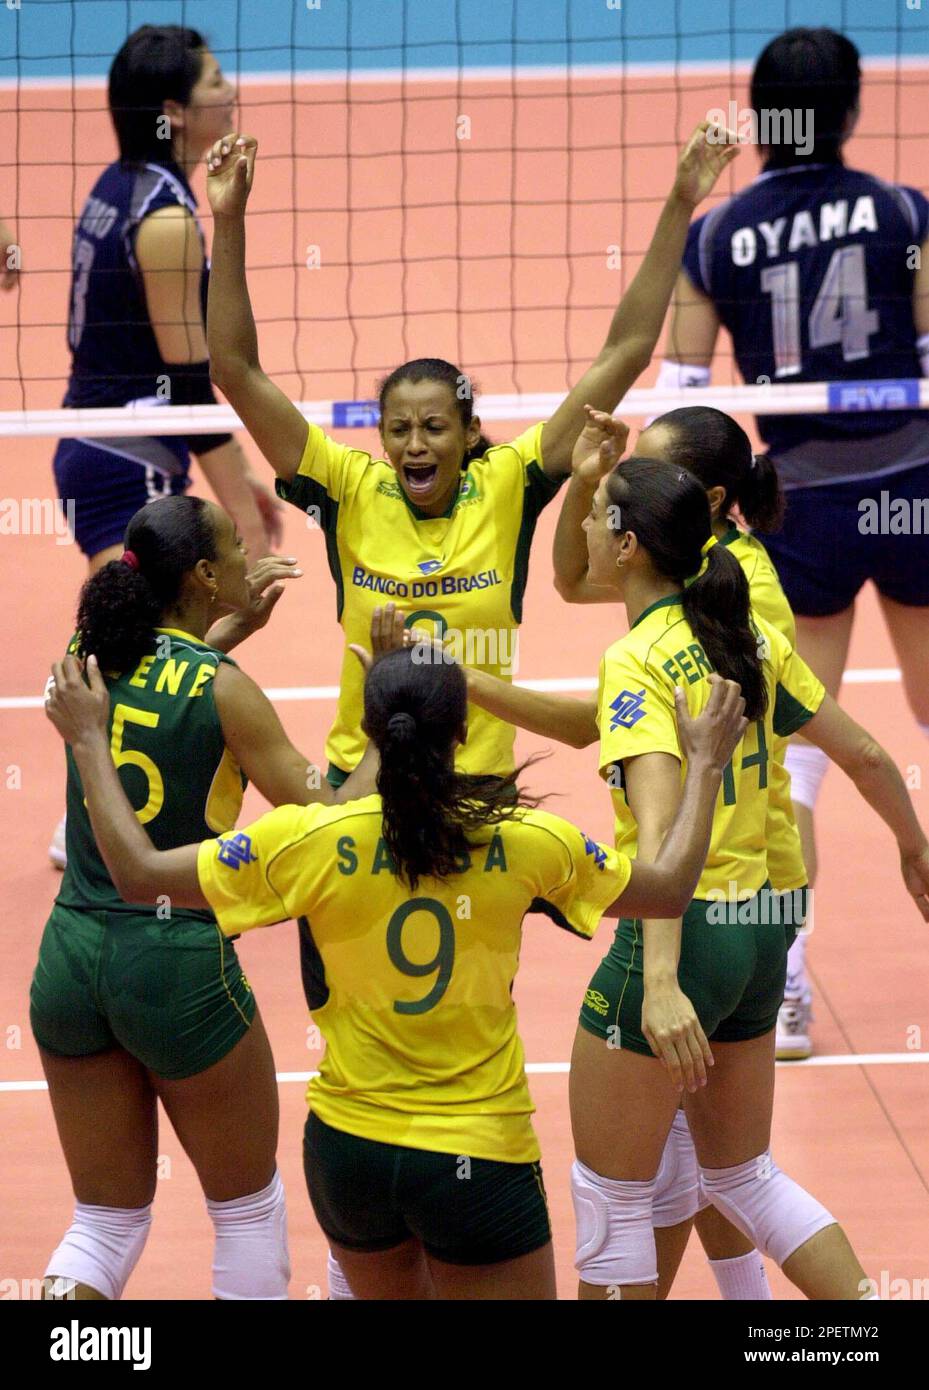 Brazil's Menezes Valeska, center, celebrates with her teammates